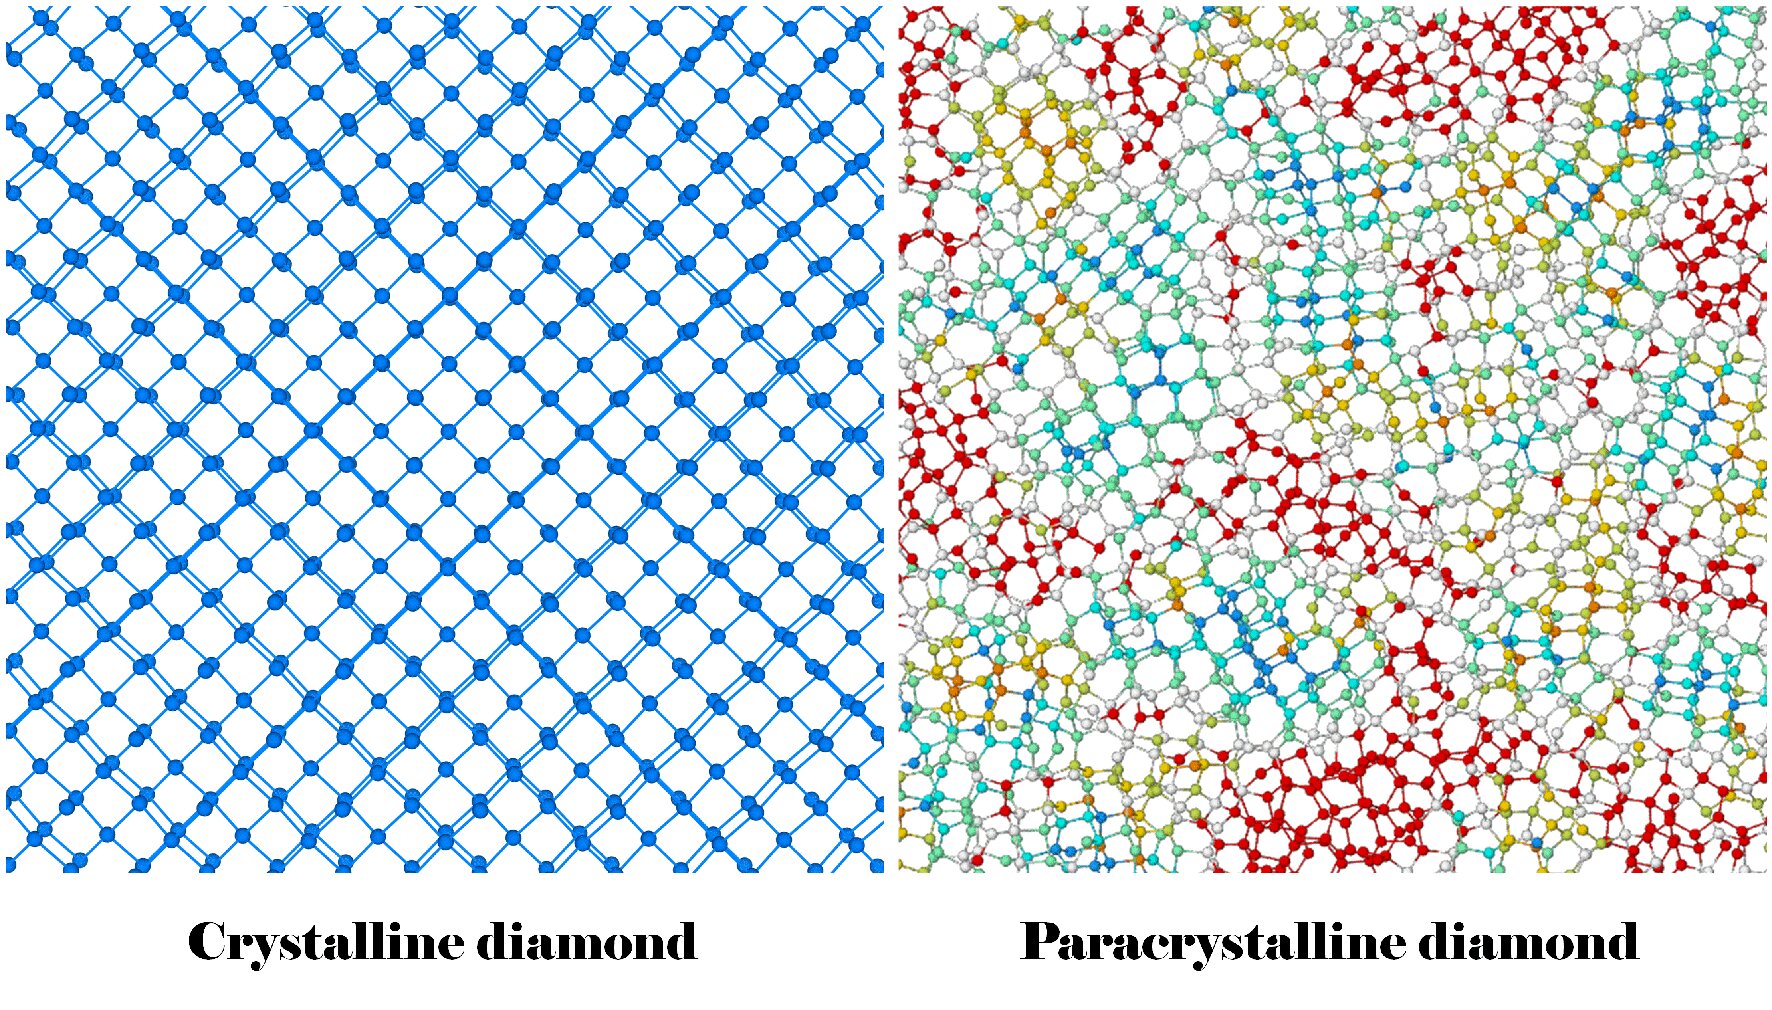 Creating a less fragile diamond using fullerenes